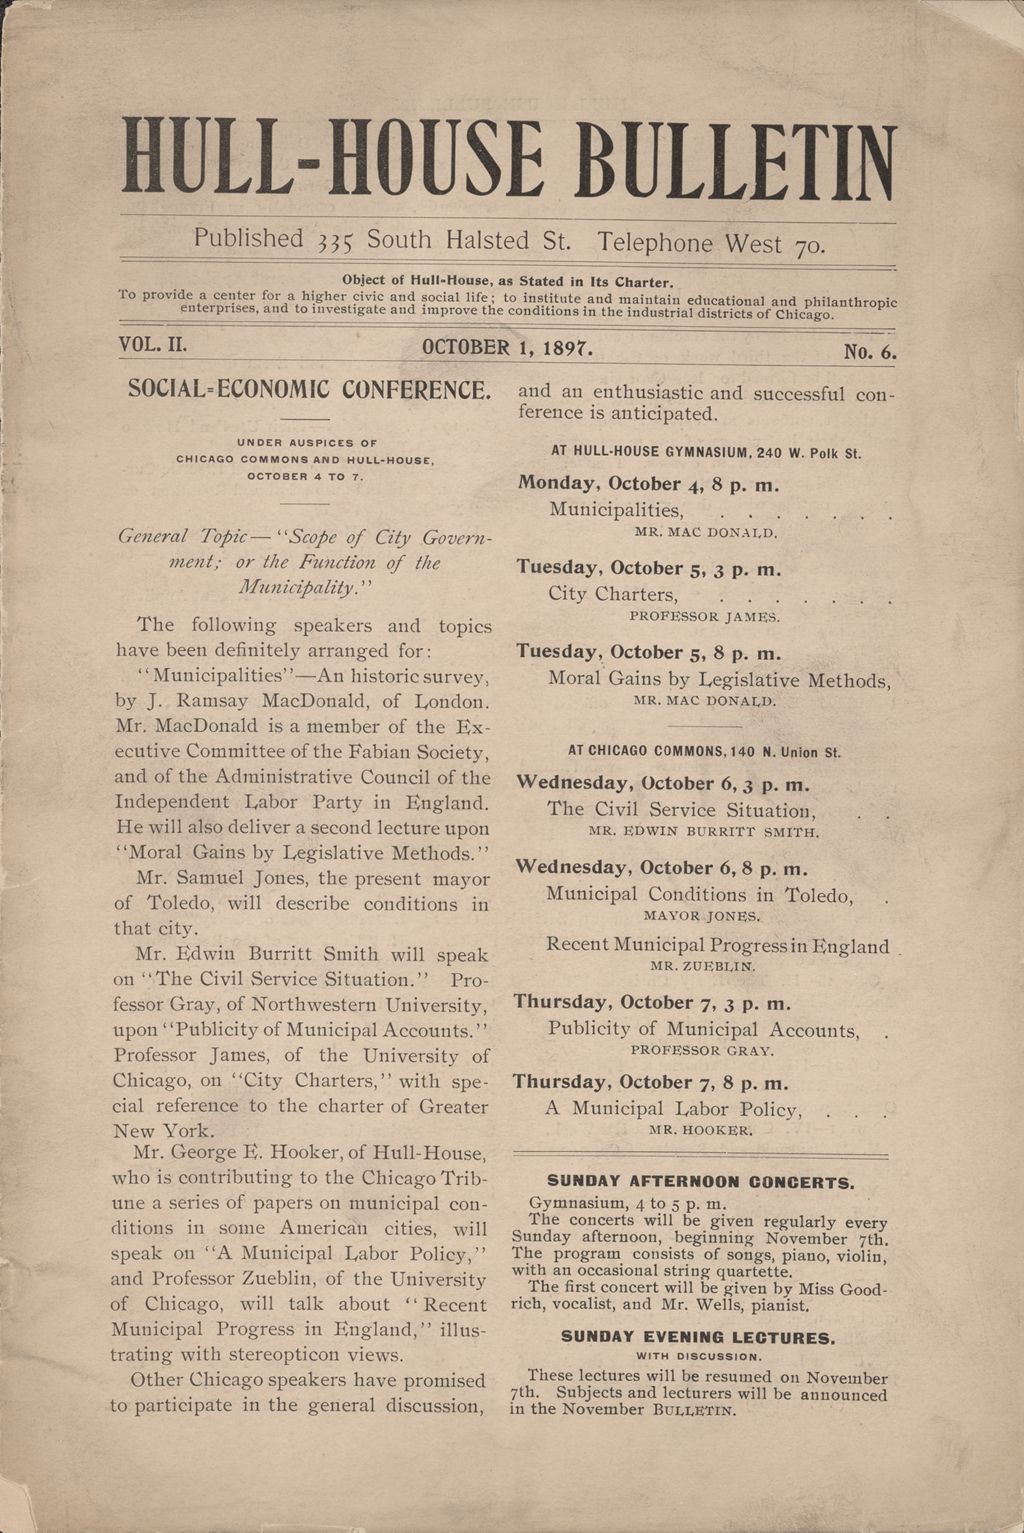 Hull-House Bulletin, vol. 2, no. 6, 1897: Oct. 1